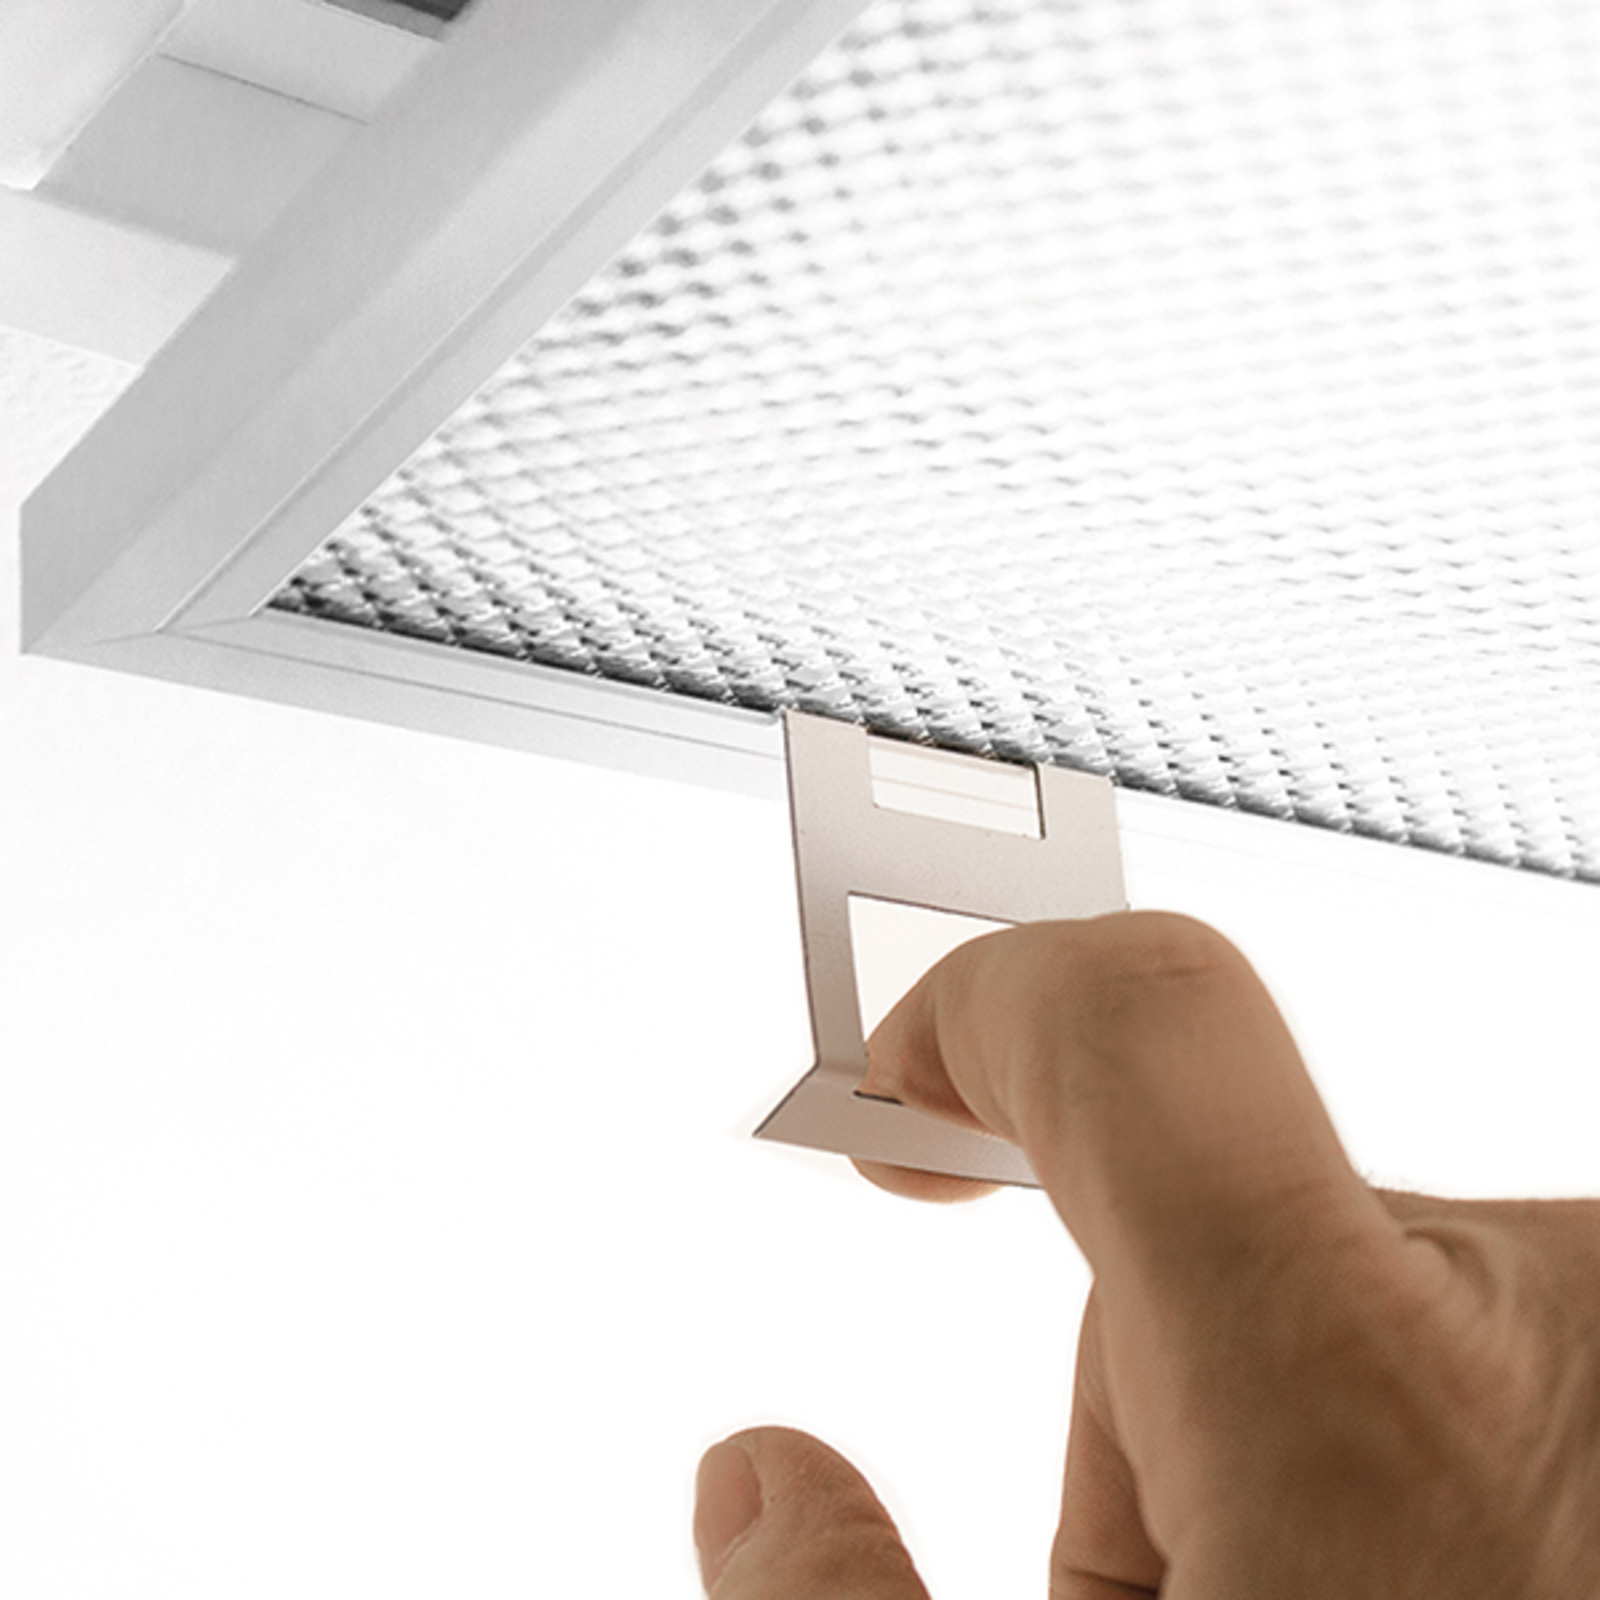 Protection-PRAMP 660 office ceiling light